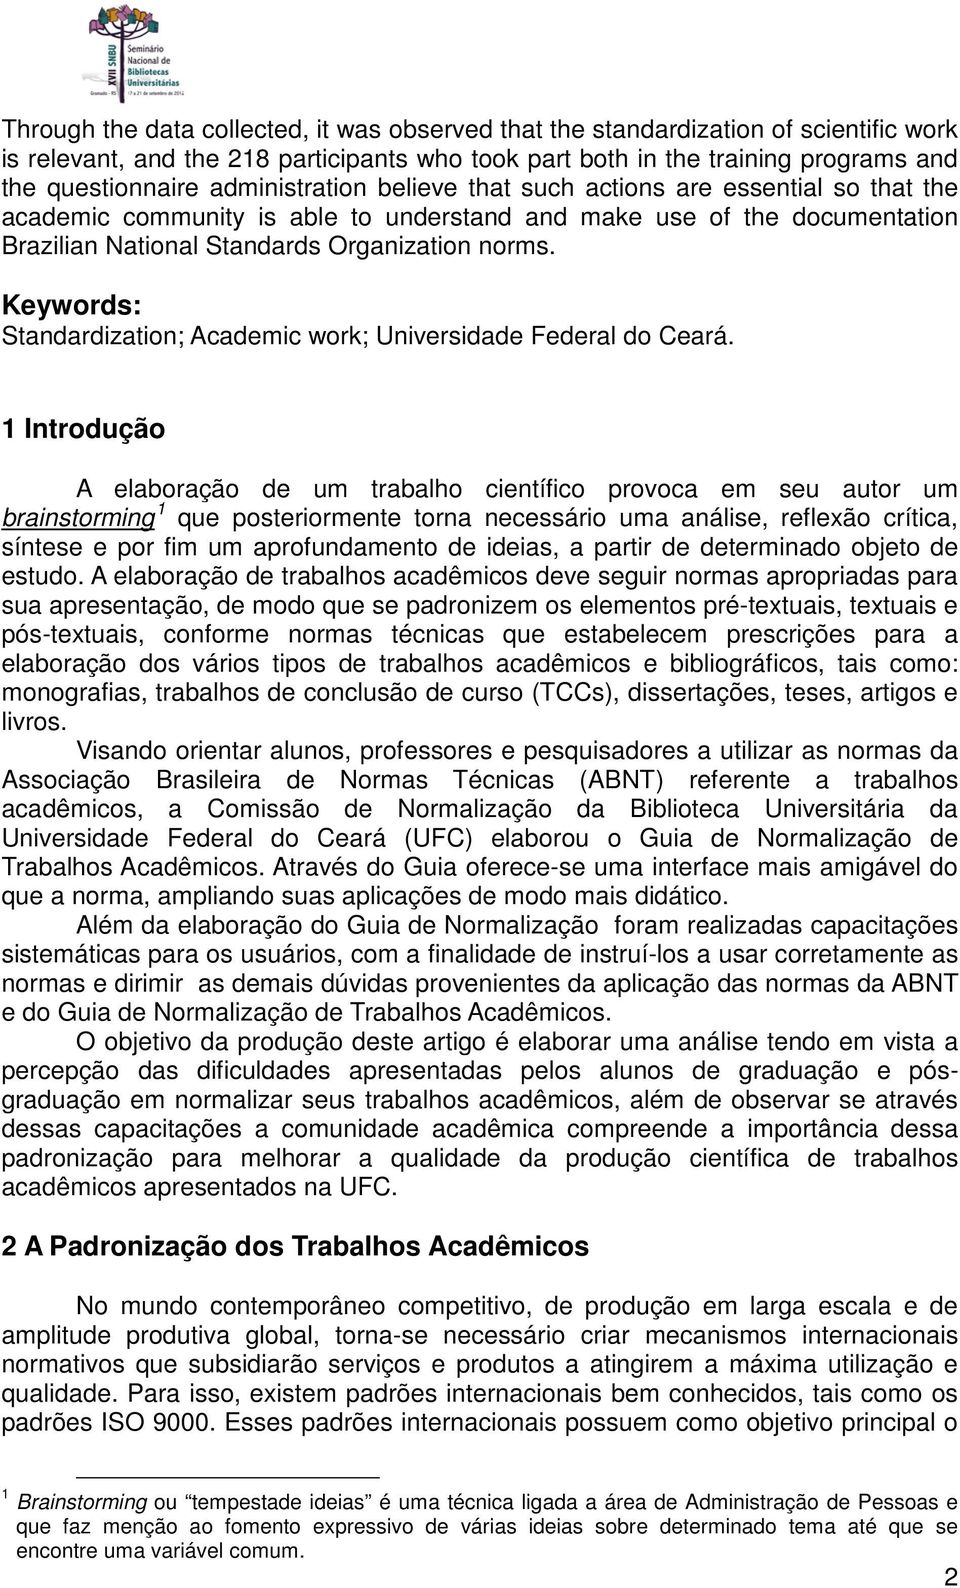 Keywords: Standardization; Academic work; Universidade Federal do Ceará.